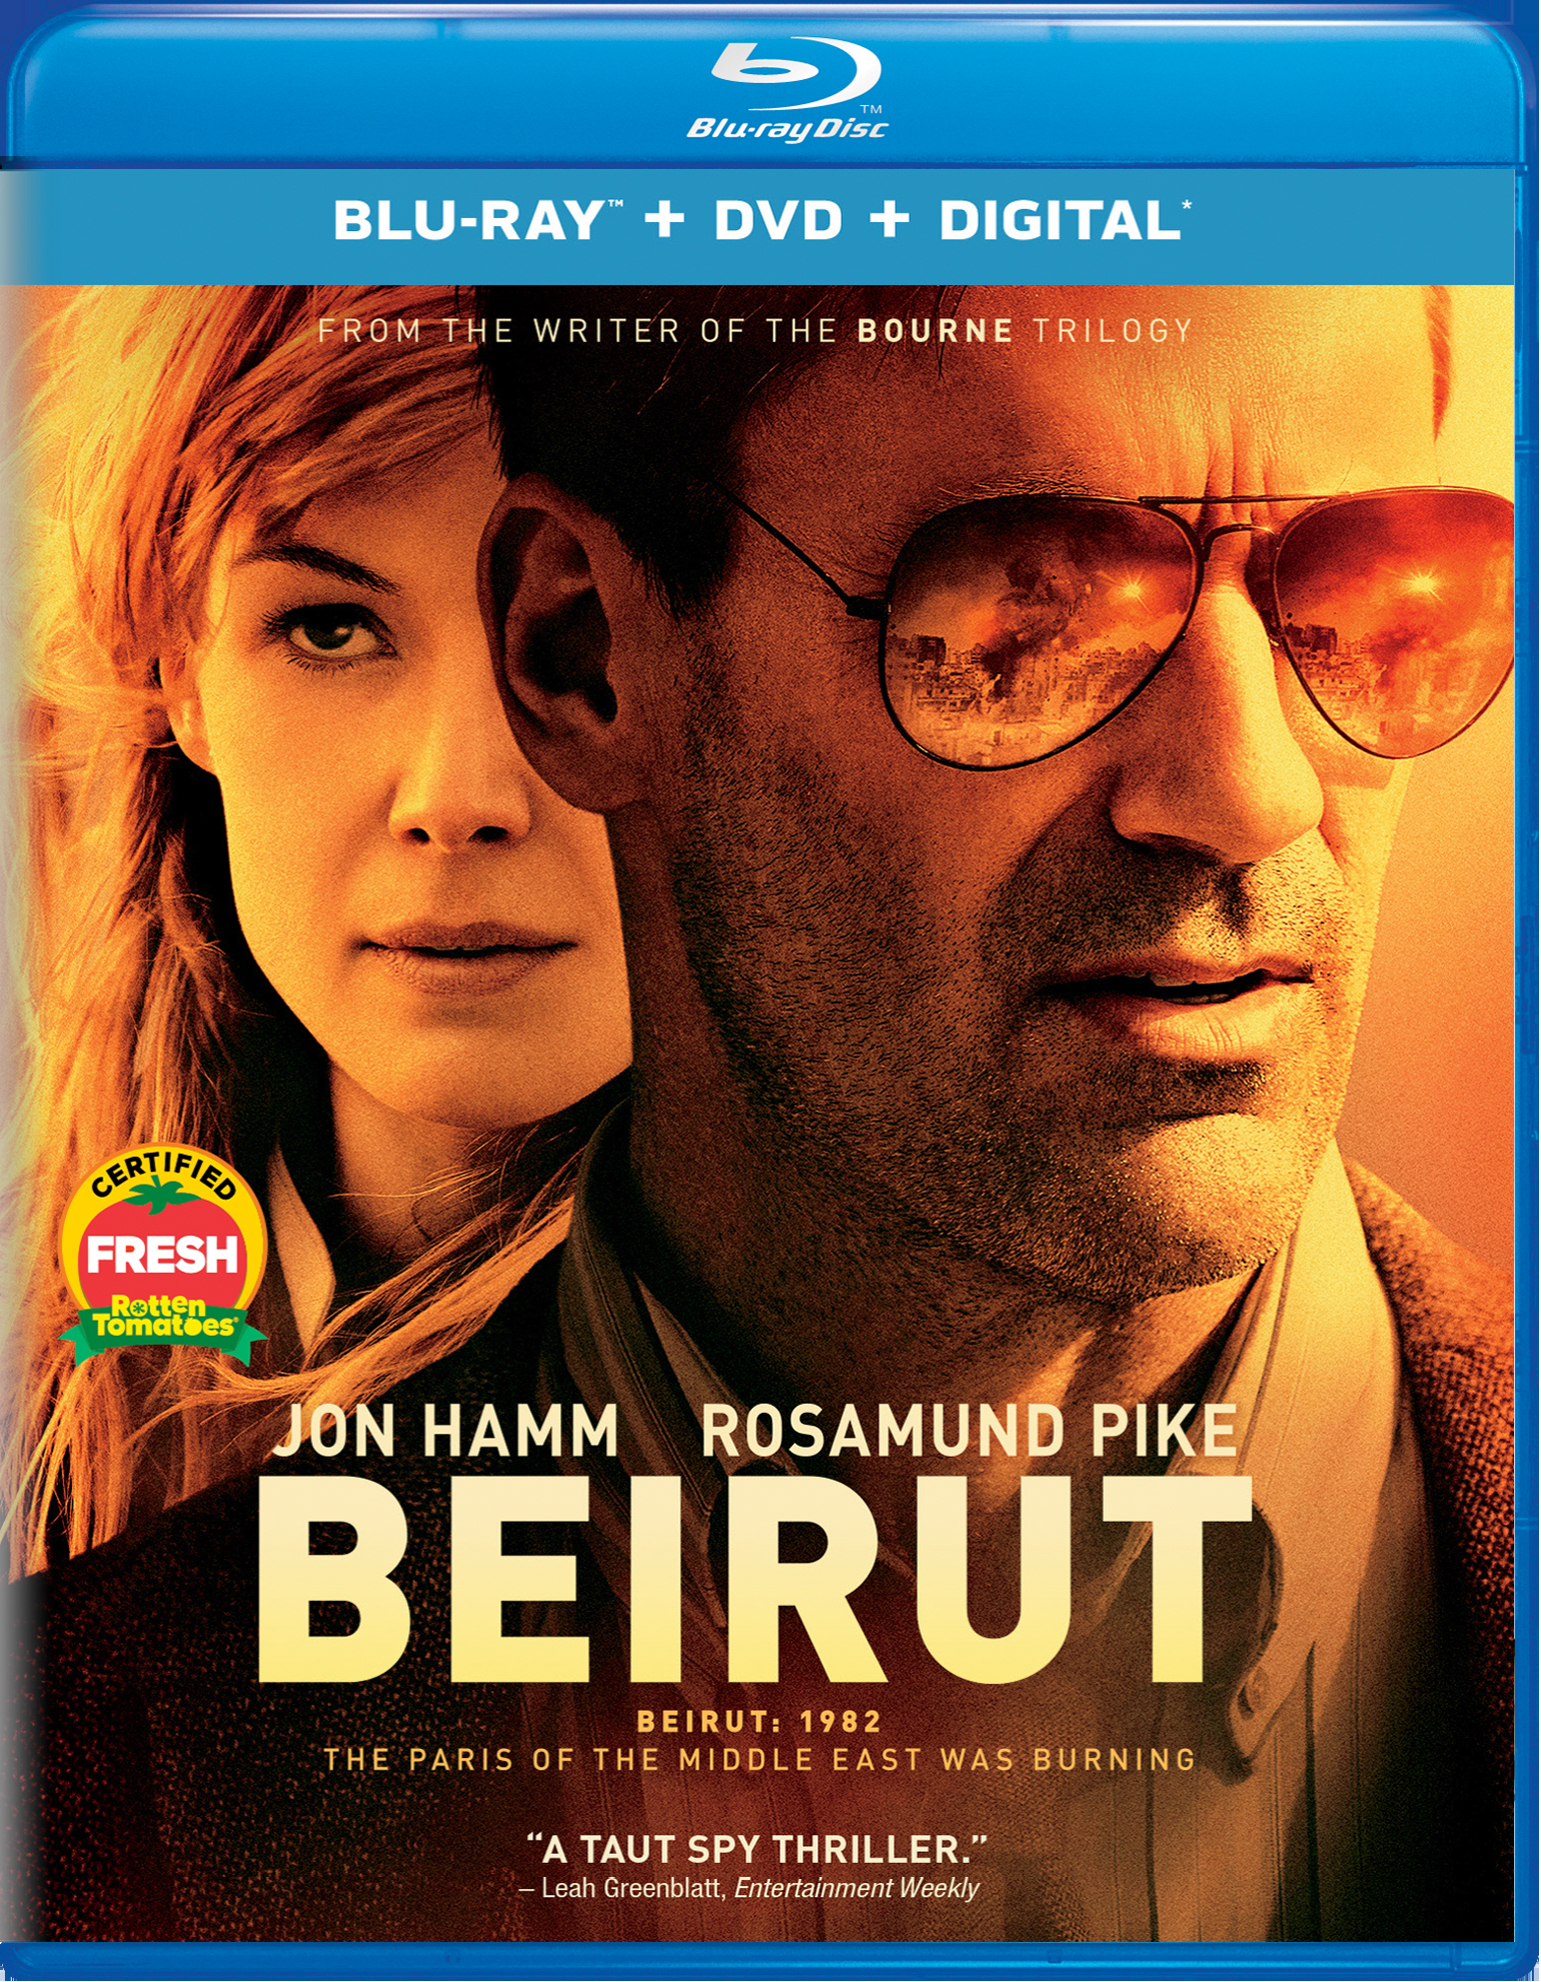 Beirut (DVD + Digital) - Blu-ray [ 2018 ]  - Travel Documentaries On Blu-ray